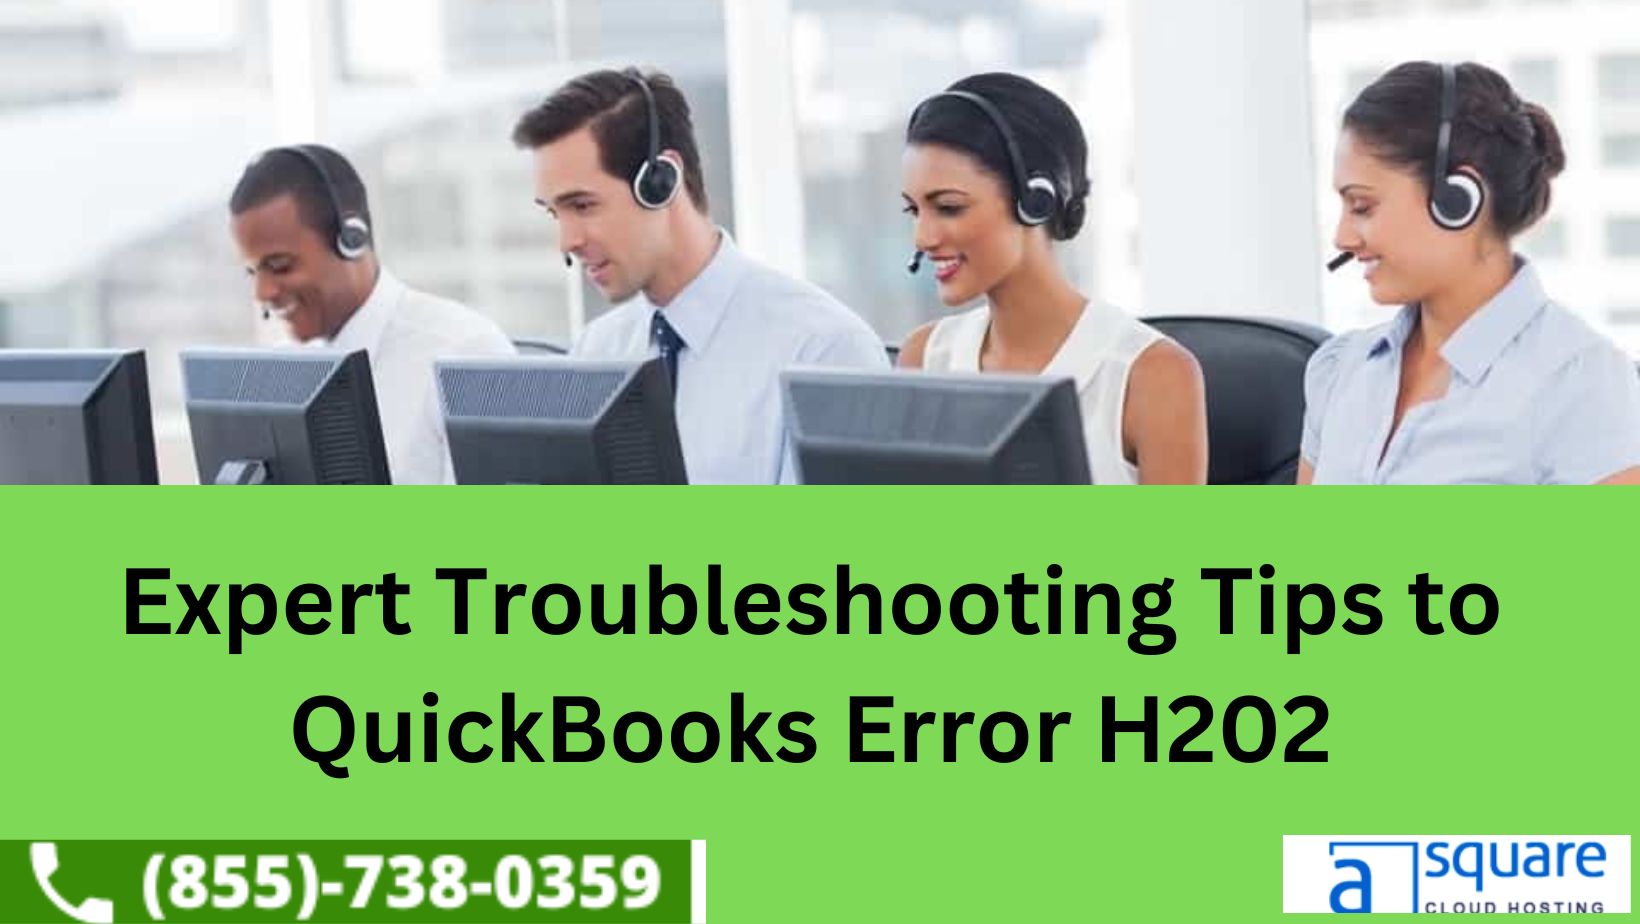 Expert Troubleshooting Tips to QuickBooks Error H202